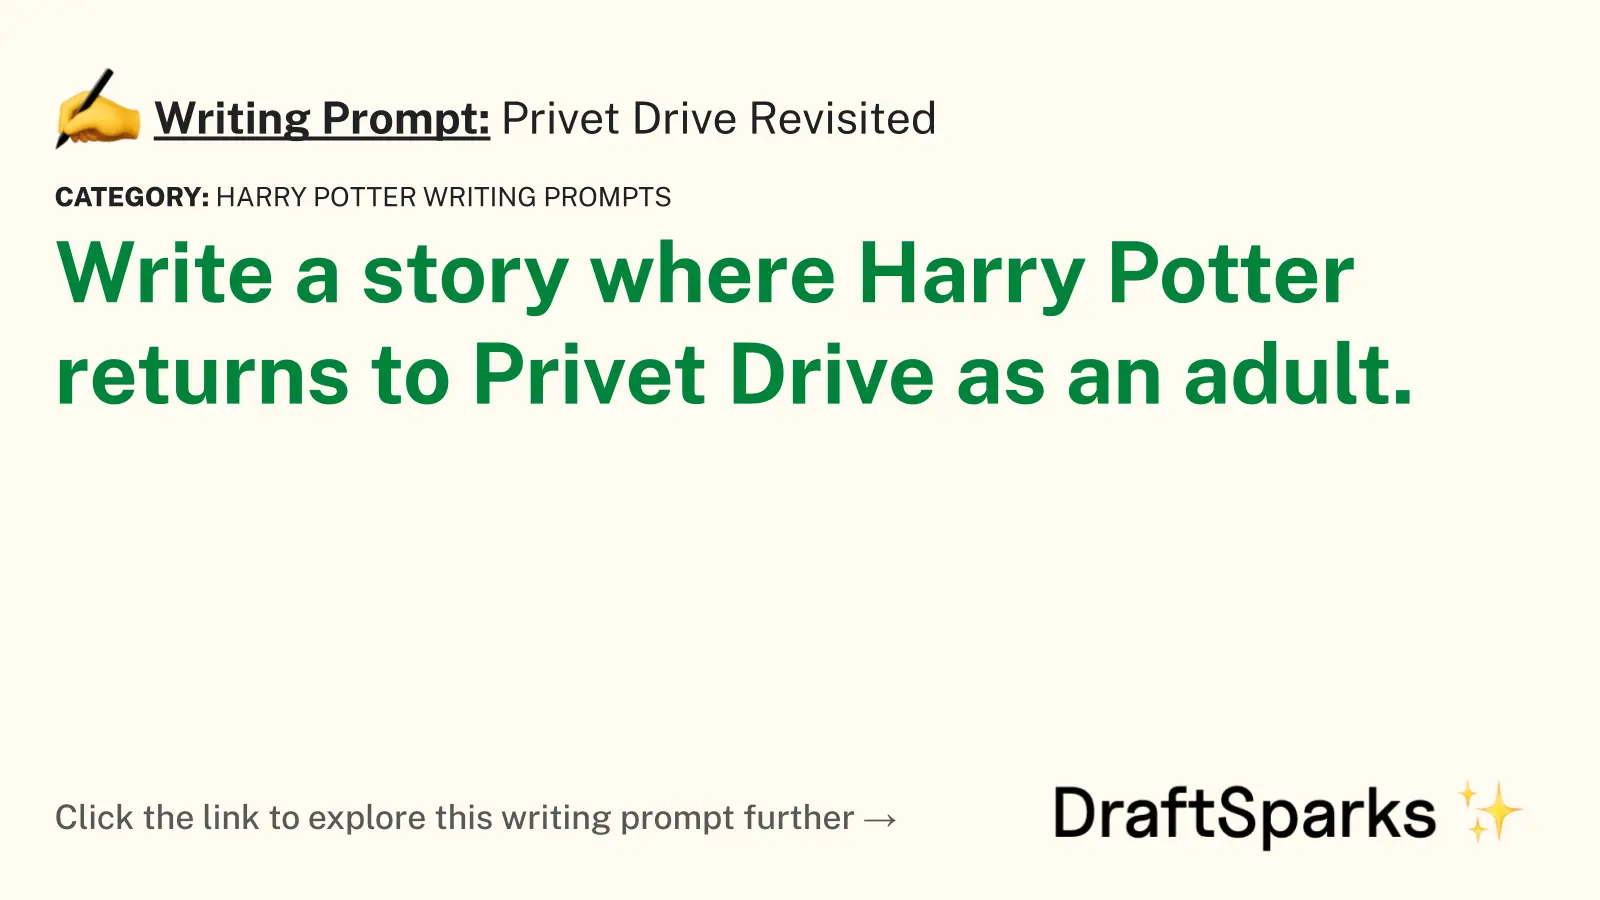 Privet Drive Revisited